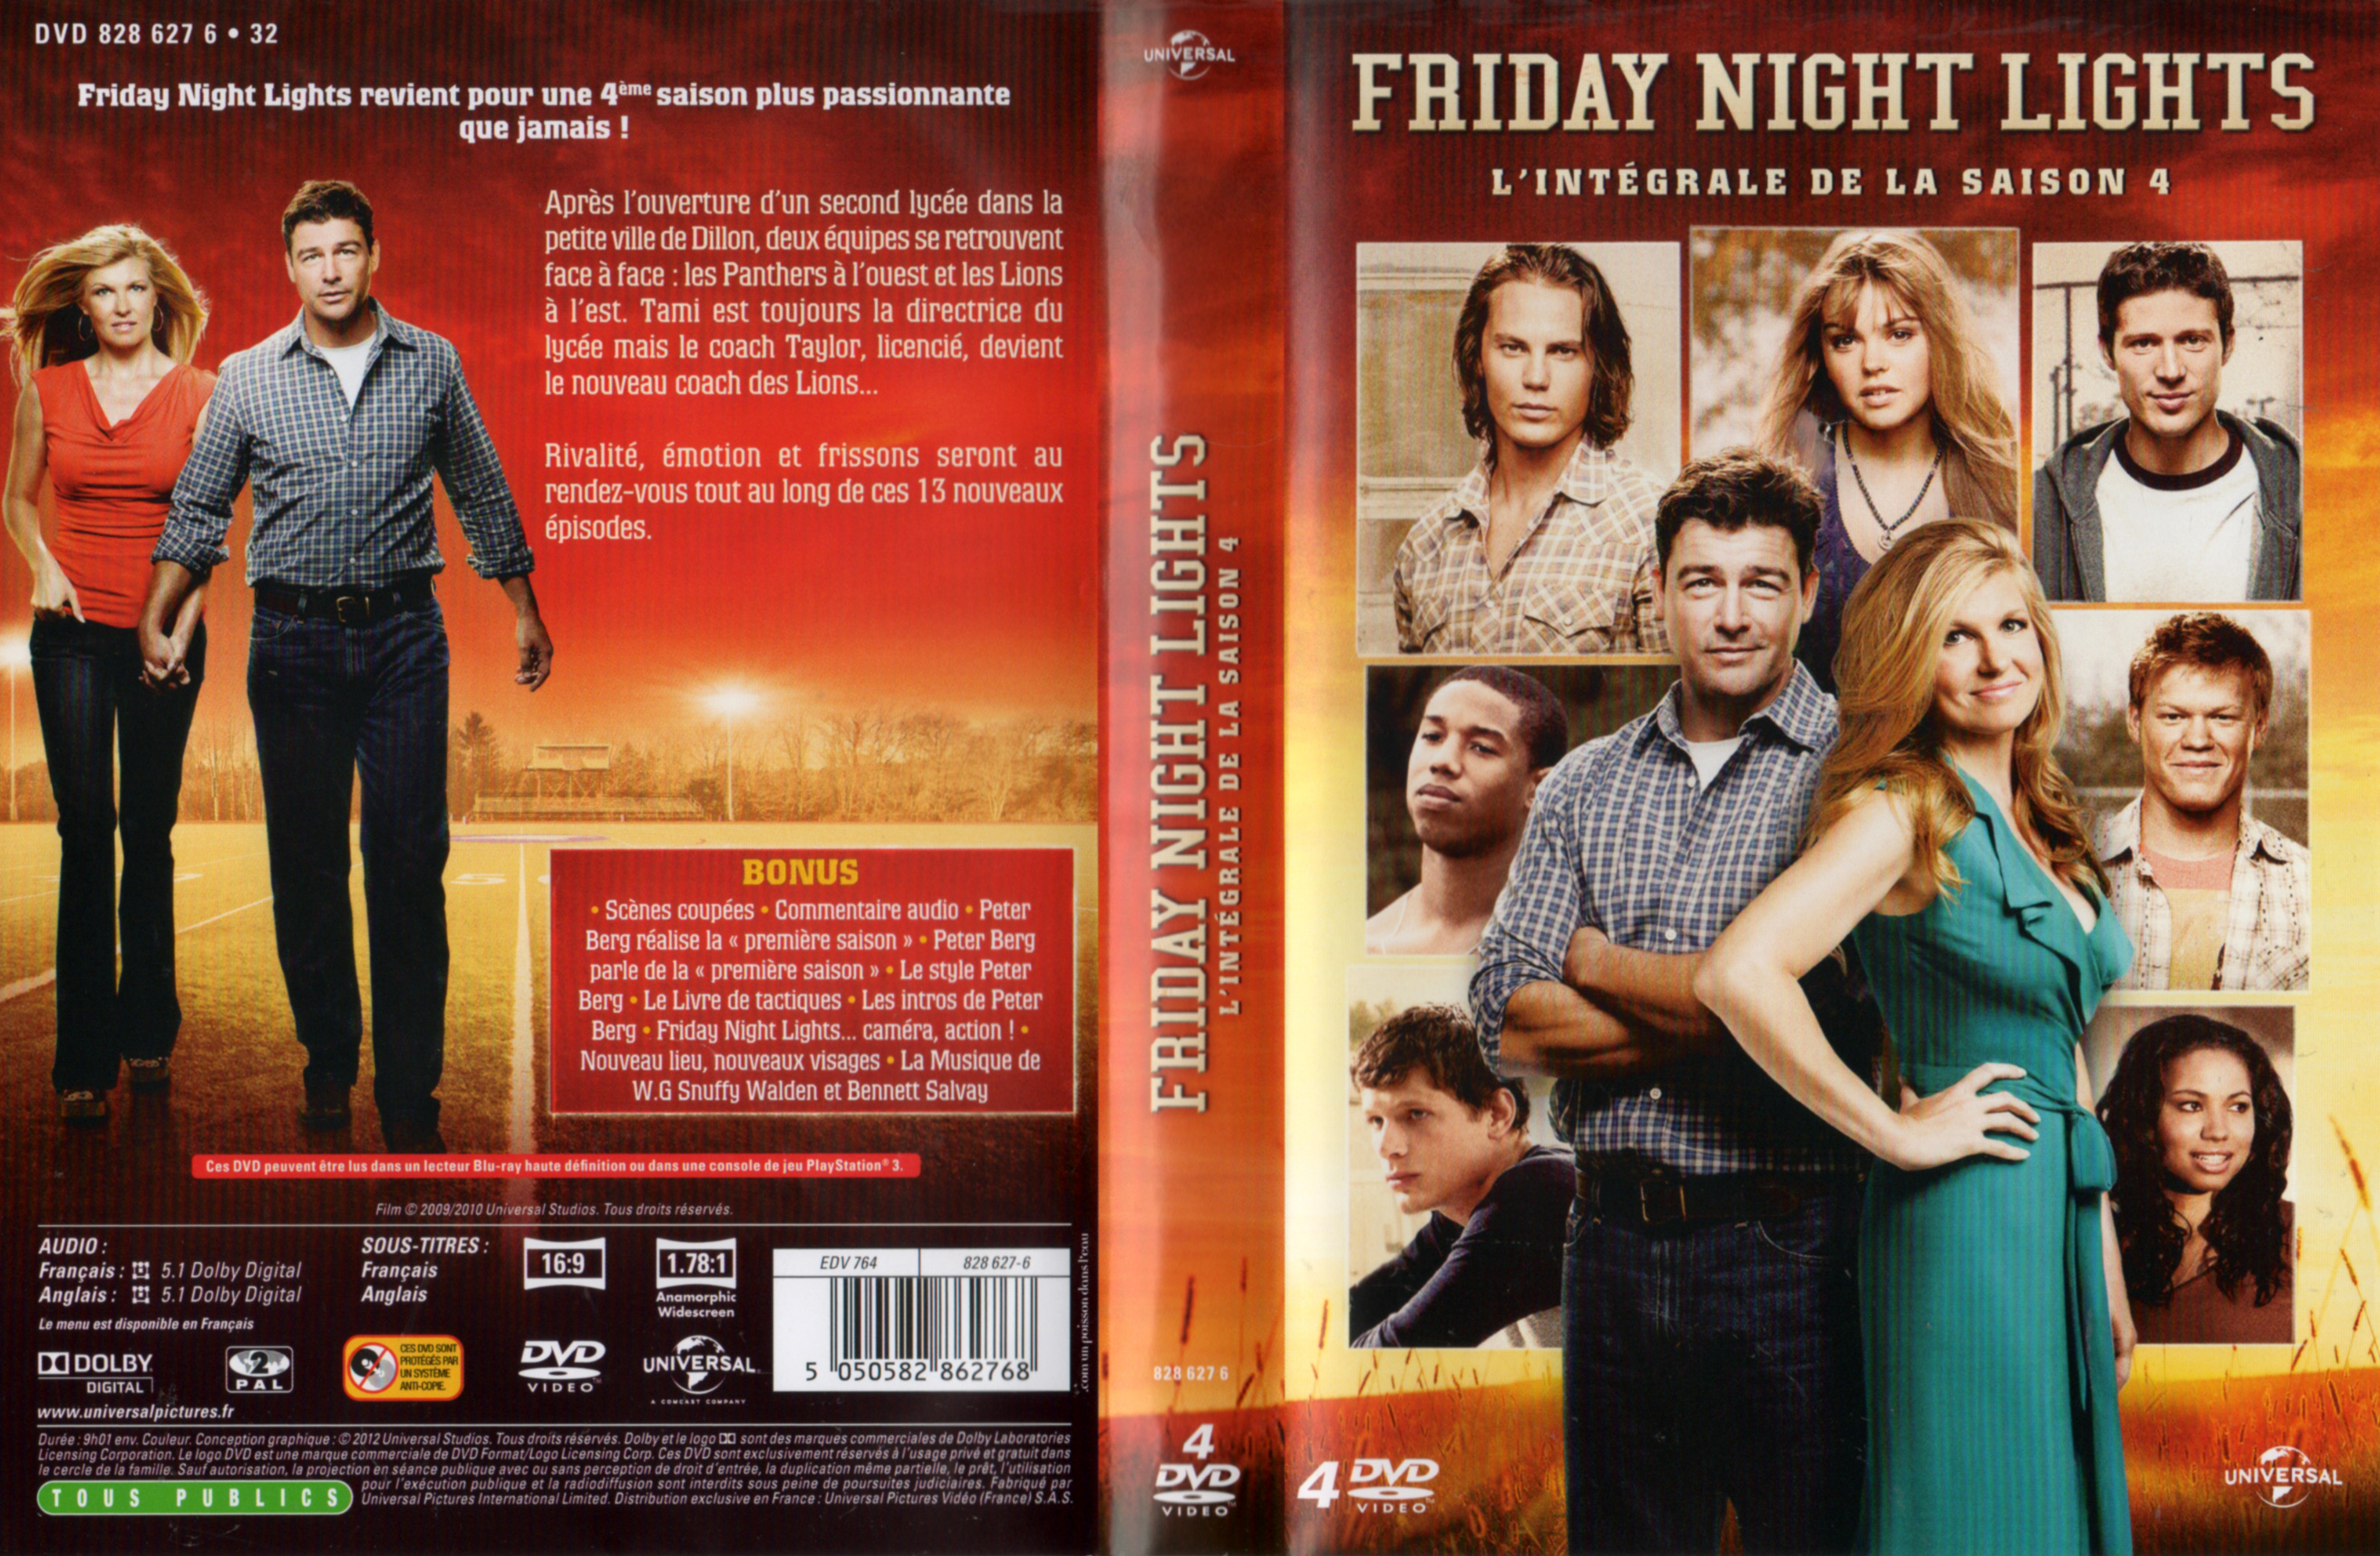 Jaquette DVD Friday night lights Saison 4 COFFRET